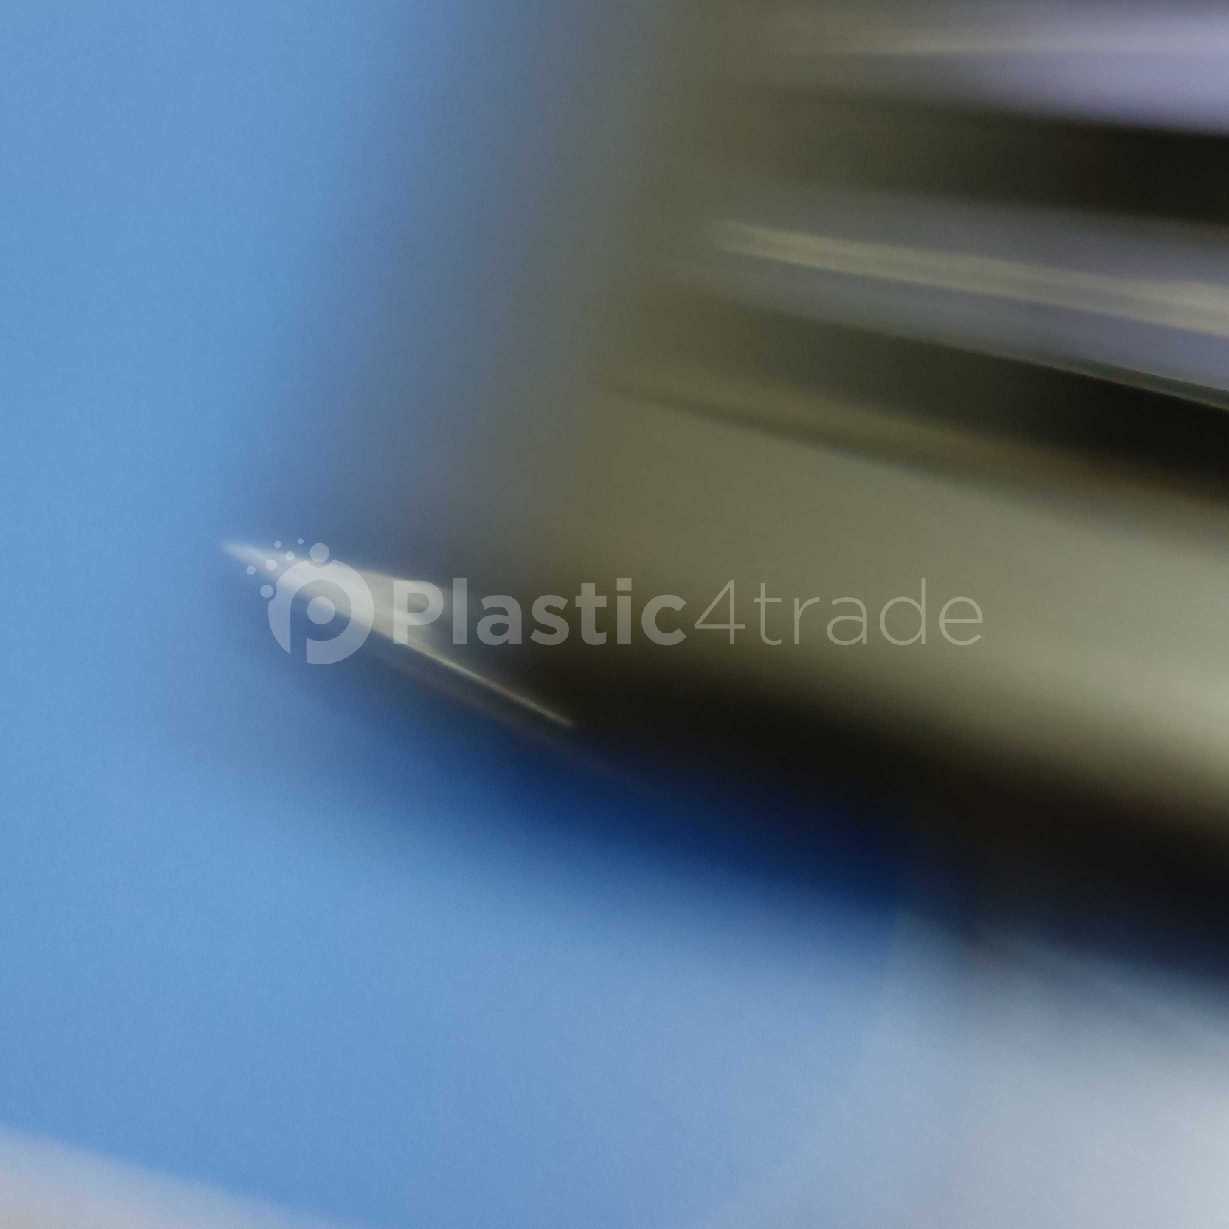 PP HDPE Reprocess Granule Blow gujarat india Plastic4trade